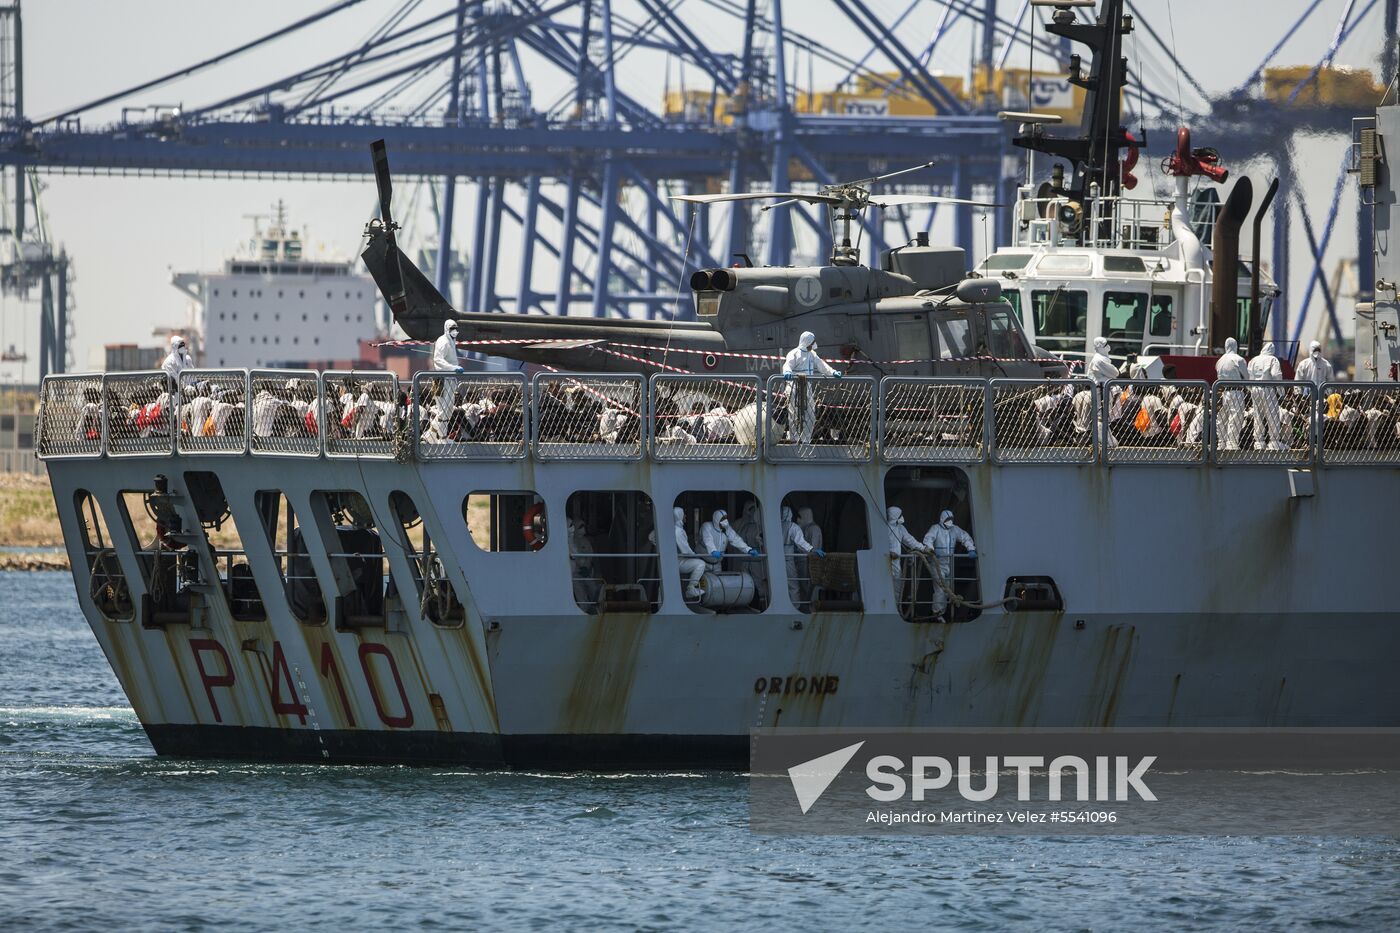 Three vessels carrying migrants dock in Spain